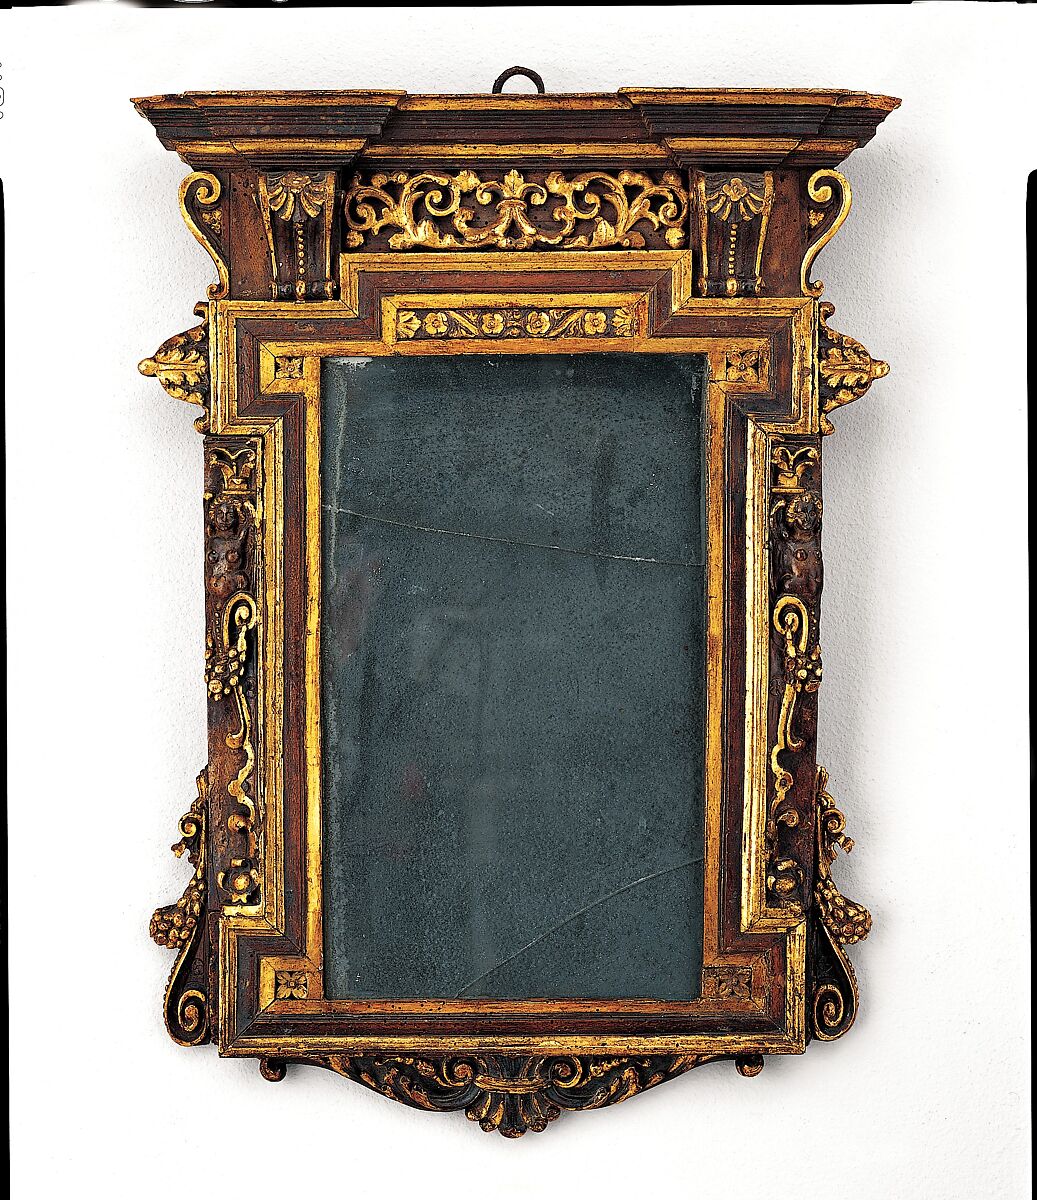 Tabernacle mirror frame, Poplar and walnut, Italian, South Lombardy 